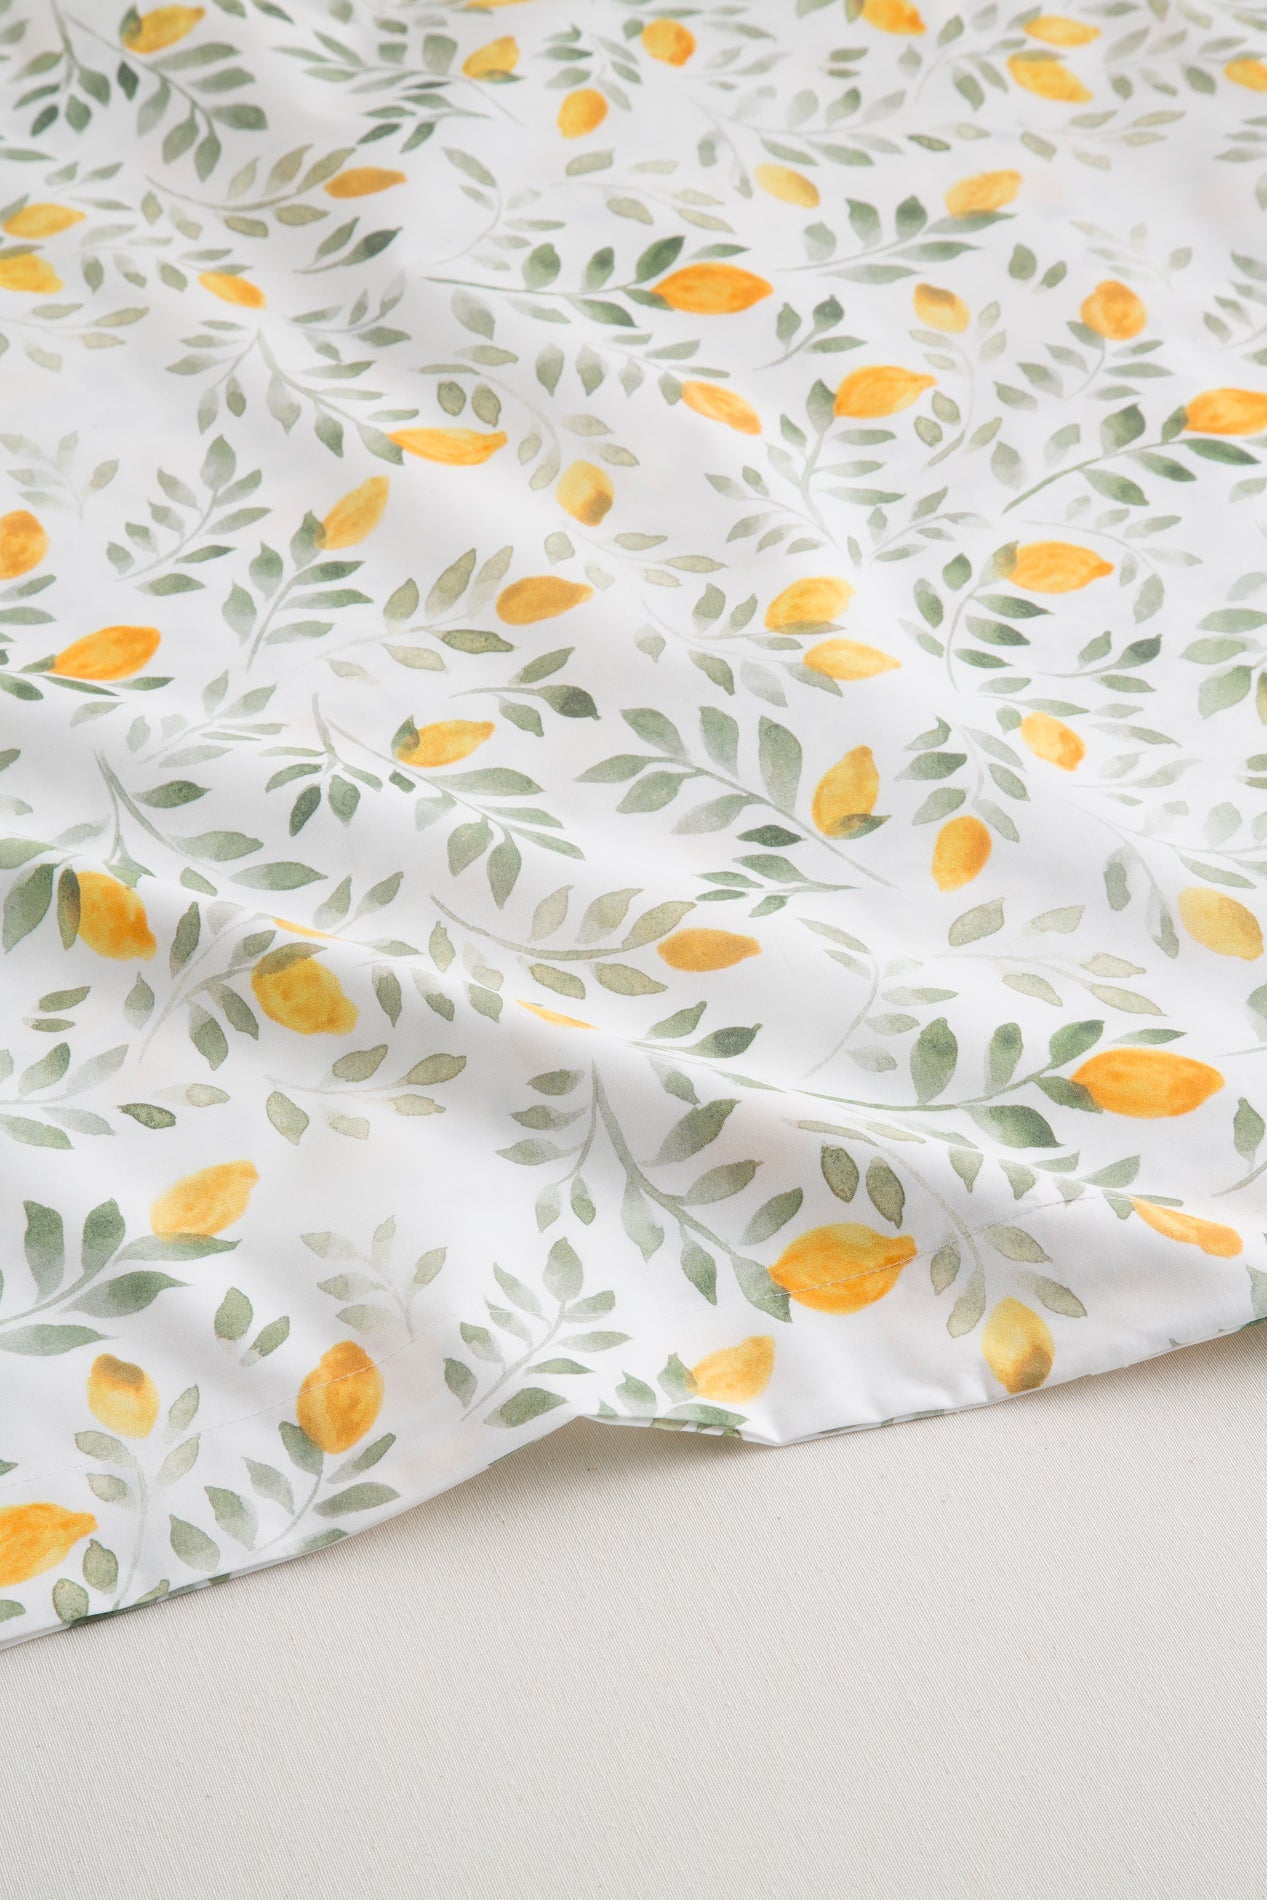 Percale Cotton Top Sheet 200h Bed 90 - Lemons